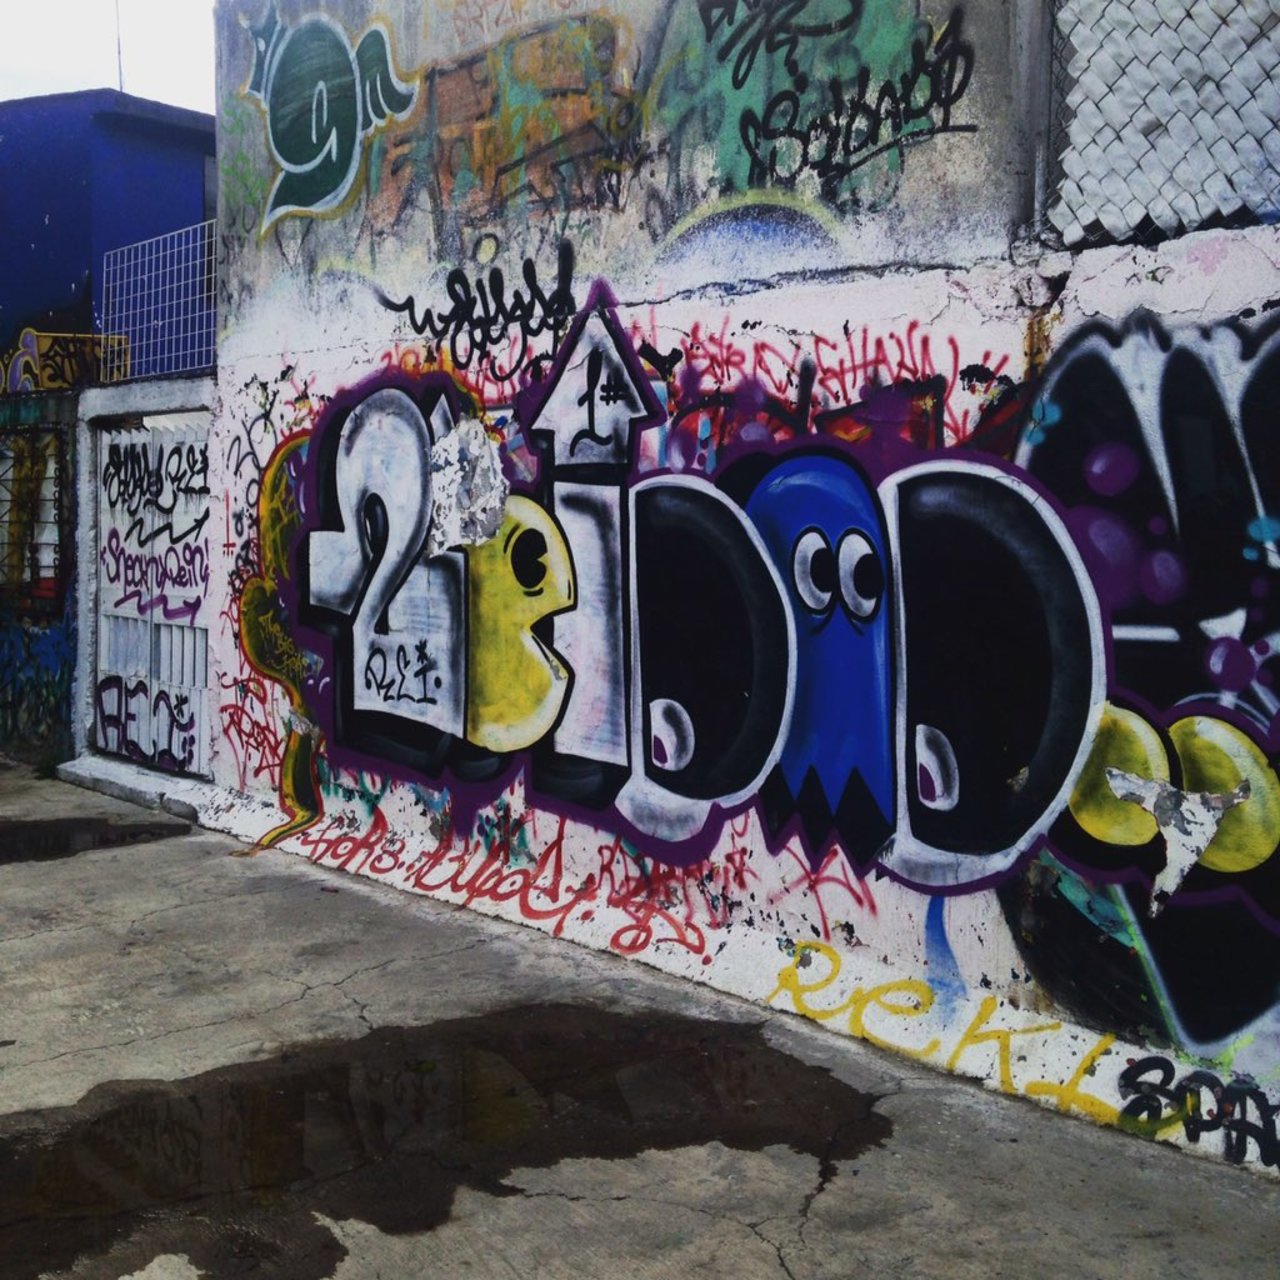 [Deidad] #PacMan // #Graffiti #StreetArt #ArtDeRue #ArteUrbano https://instagram.com/p/9MzhJTh5uk/ https://t.co/oRluATU9dk